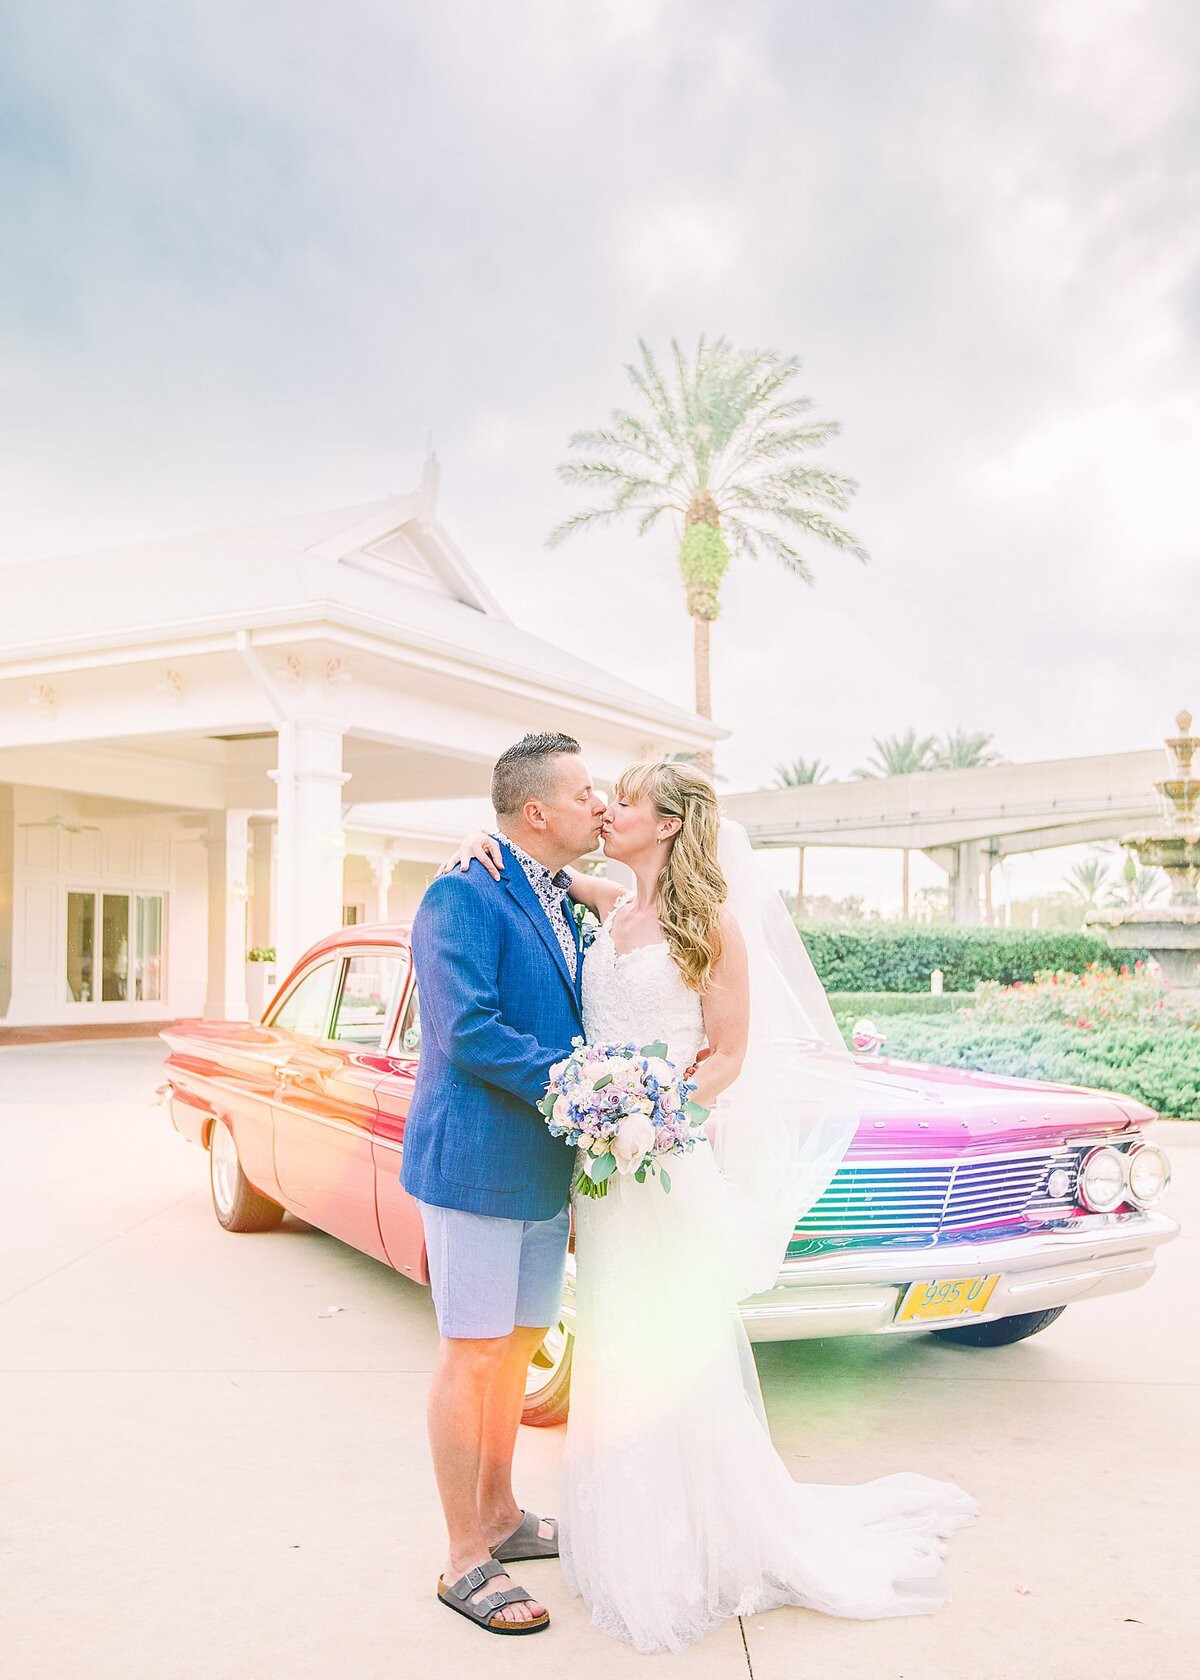 Newlyweds kiss in front of vintage car Disney's Wedding Pavilion